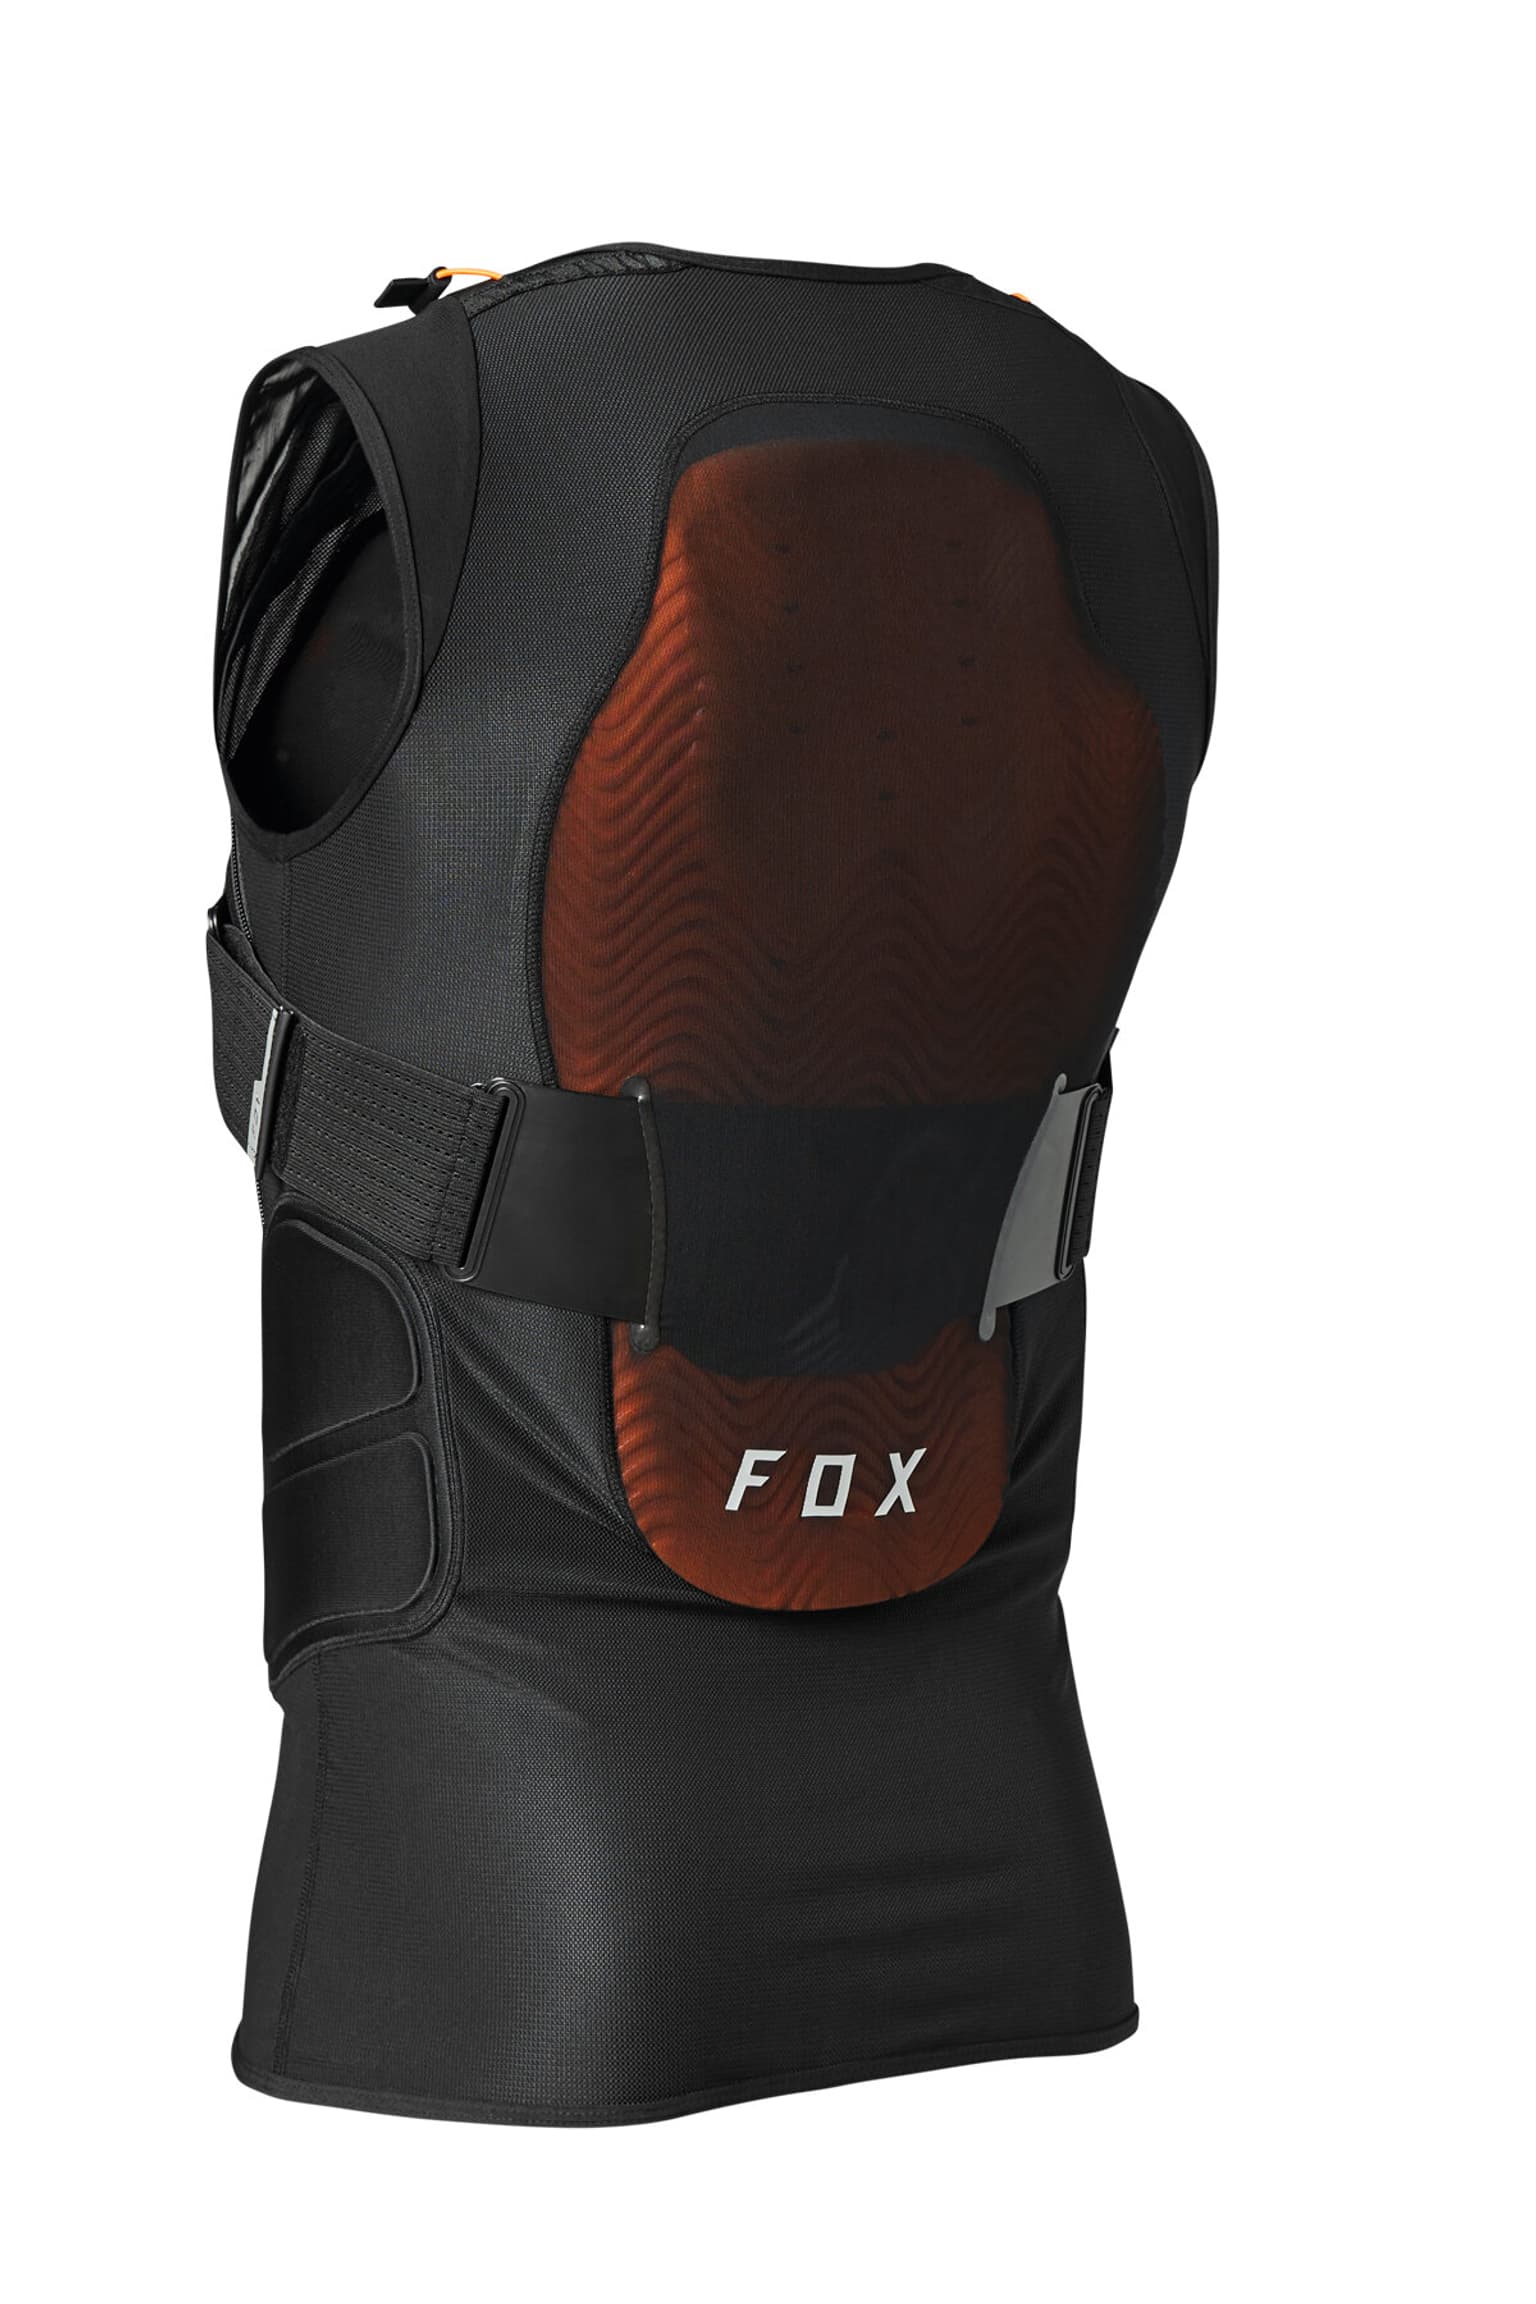 Fox Fox Baseframe Pro D3 Protektoren schwarz 2